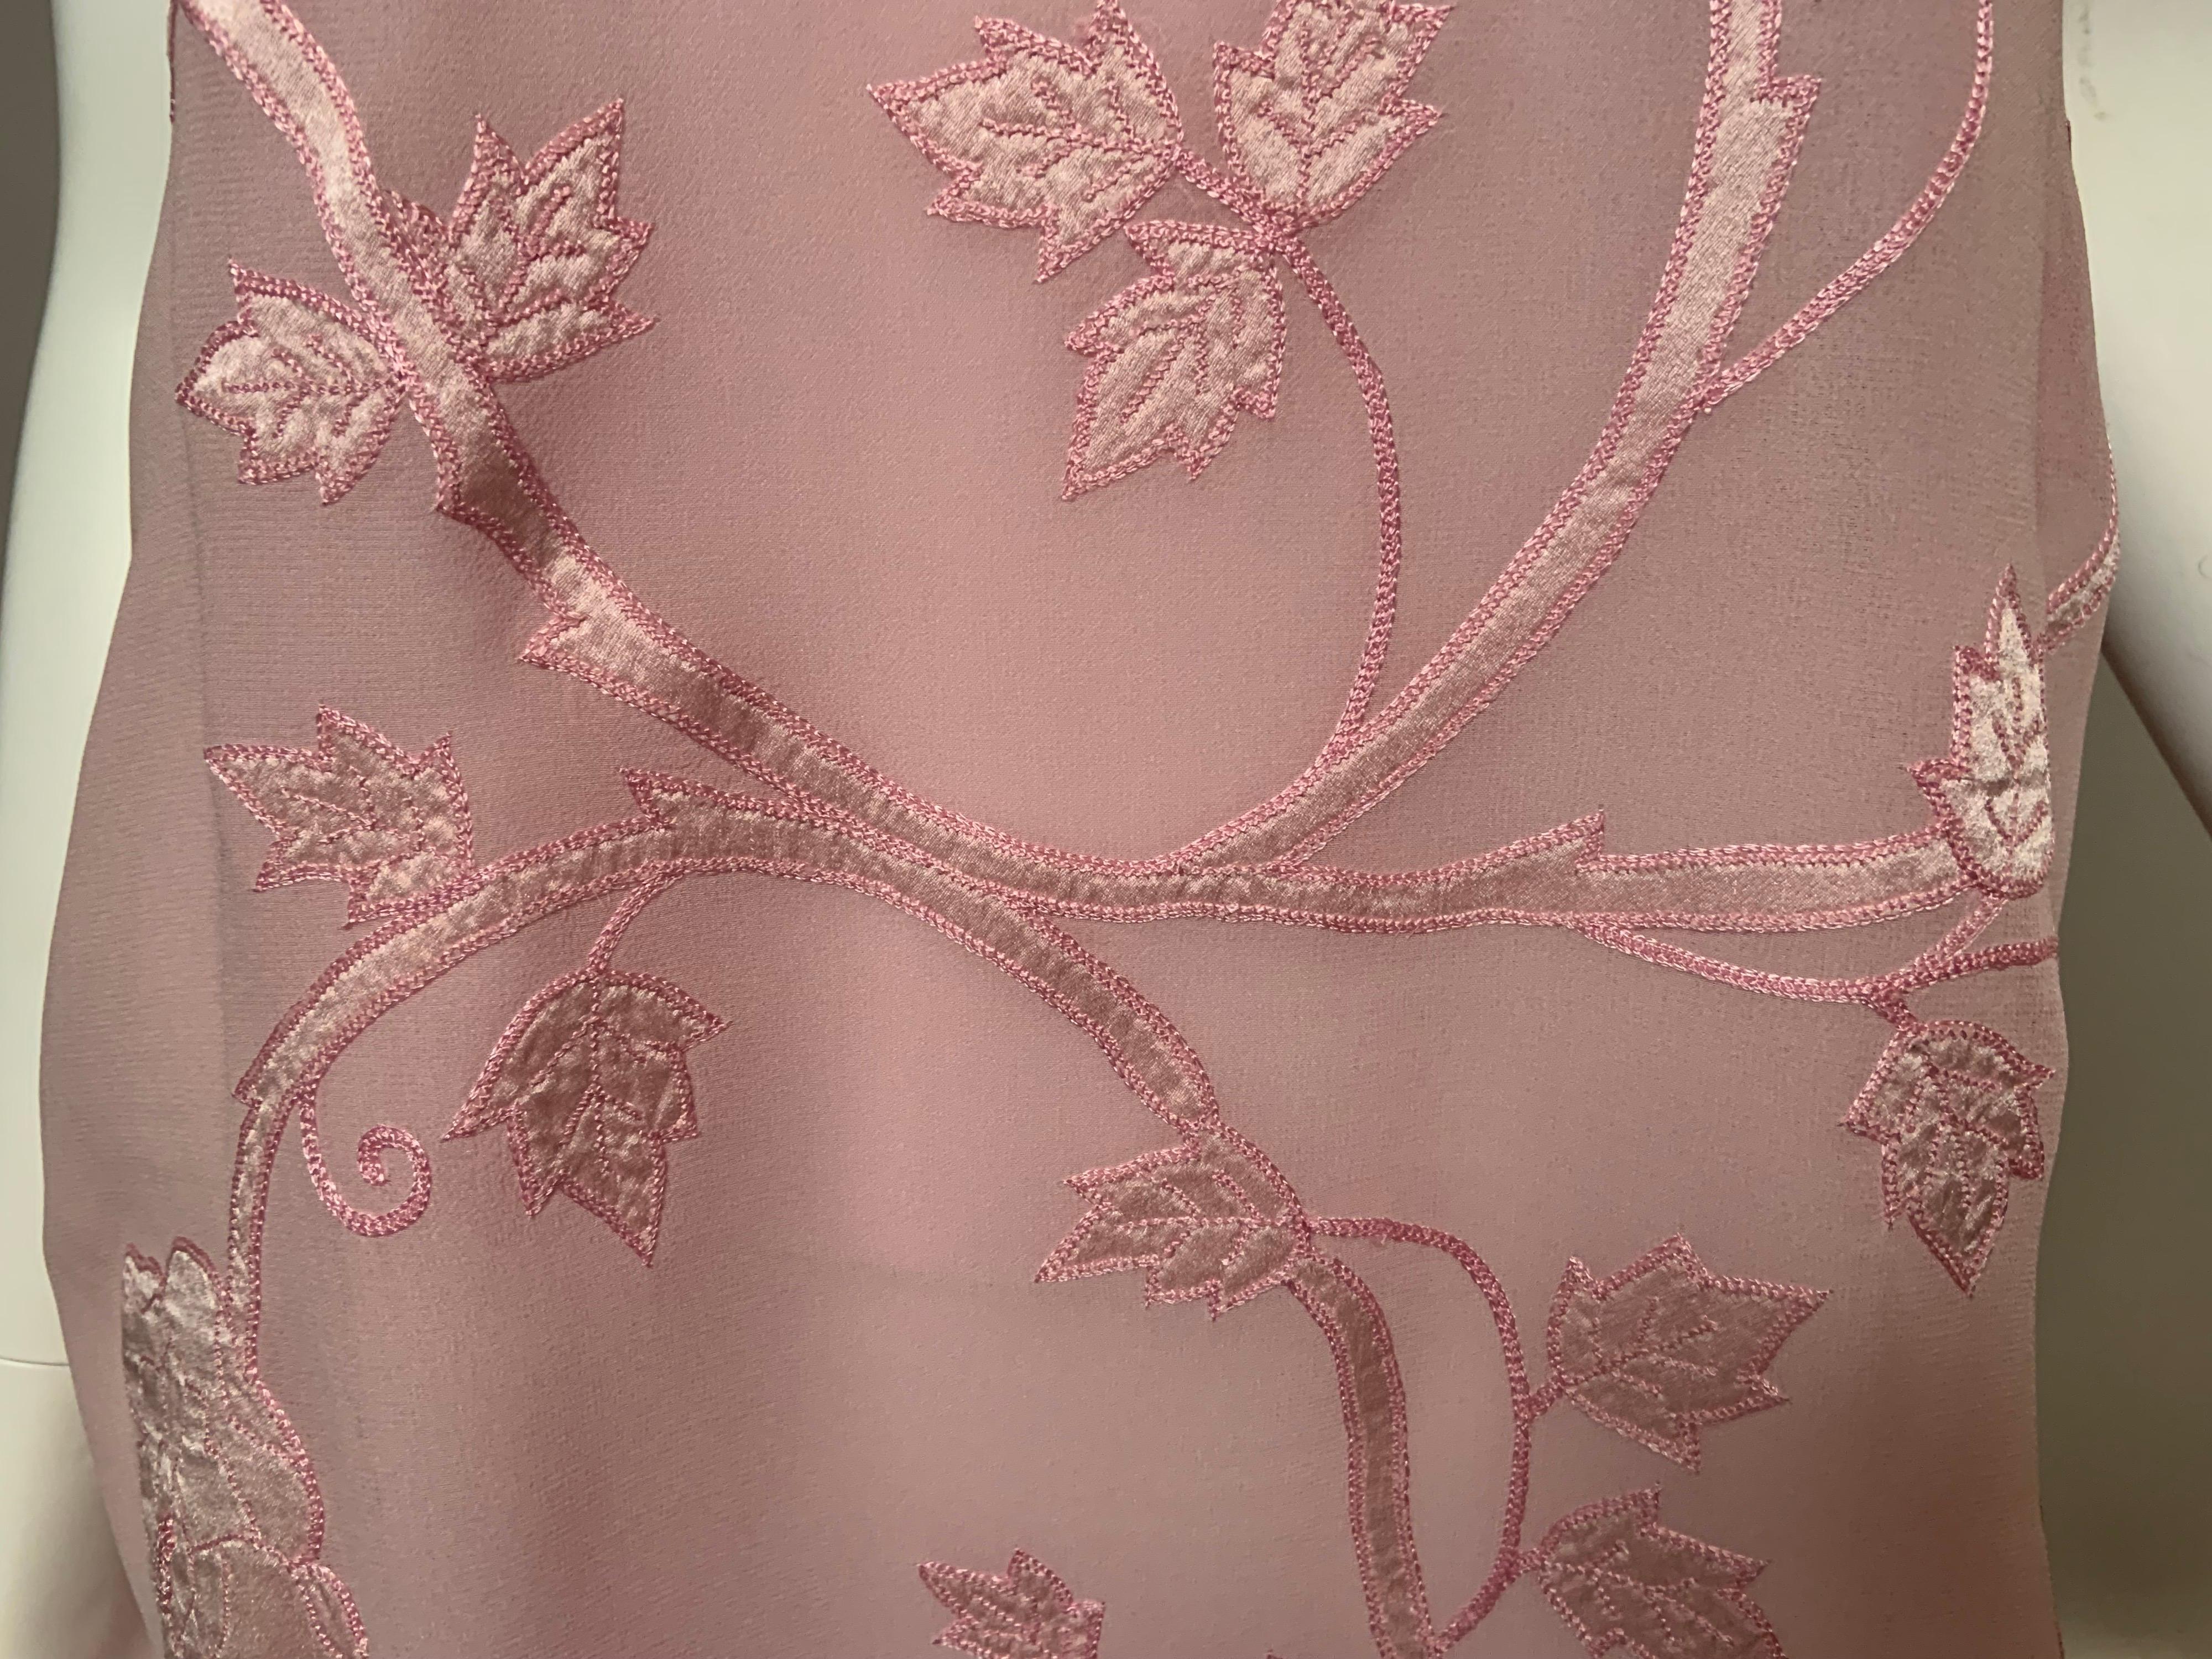 Alberta Ferretti Pink Silk Chiffon Floral Lingerie Dress Appliqued Satin Flowers For Sale 6